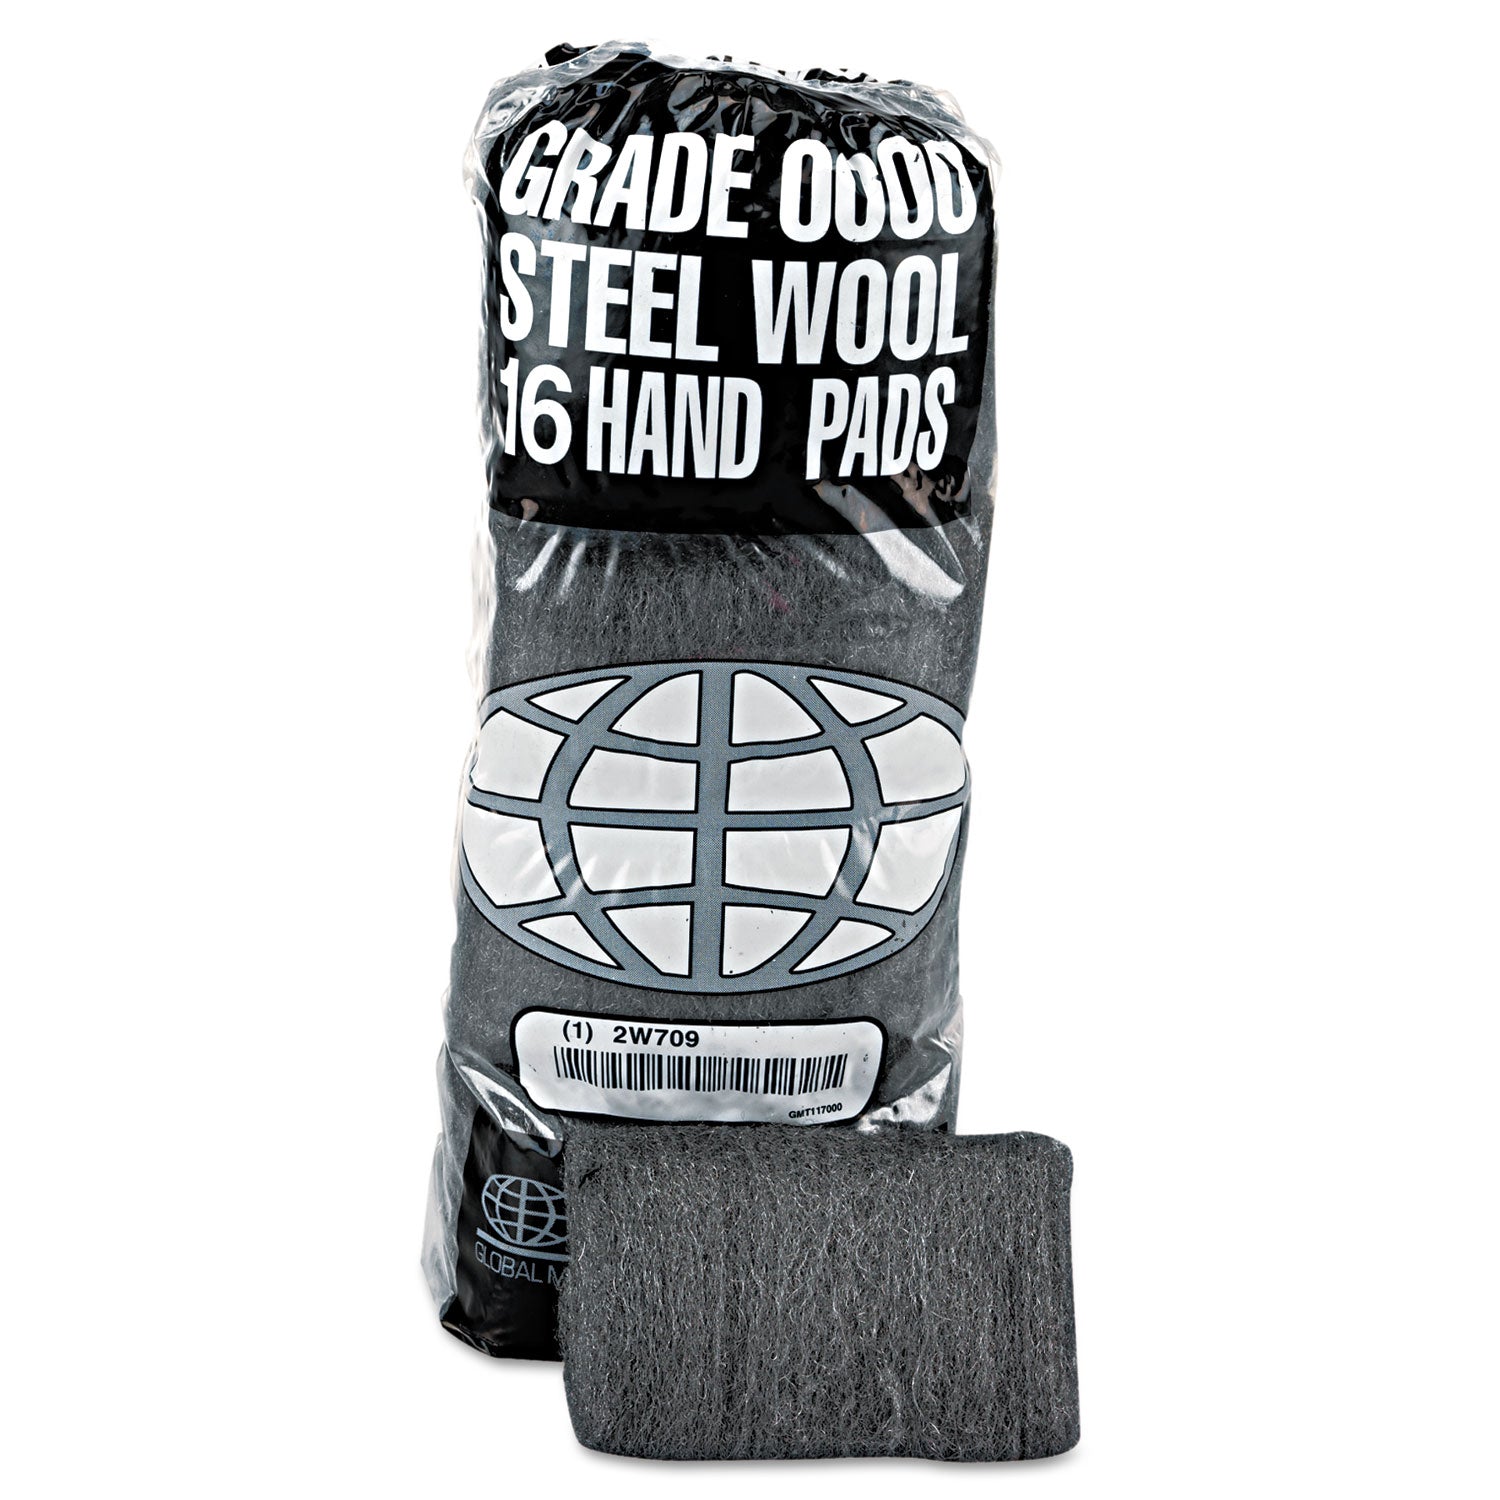 Industrial-Quality Steel Wool Hand Pads, #0000 Super Fine, Steel Gray, 16 Pads/Sleeve, 12 Sleeves/Carton - 